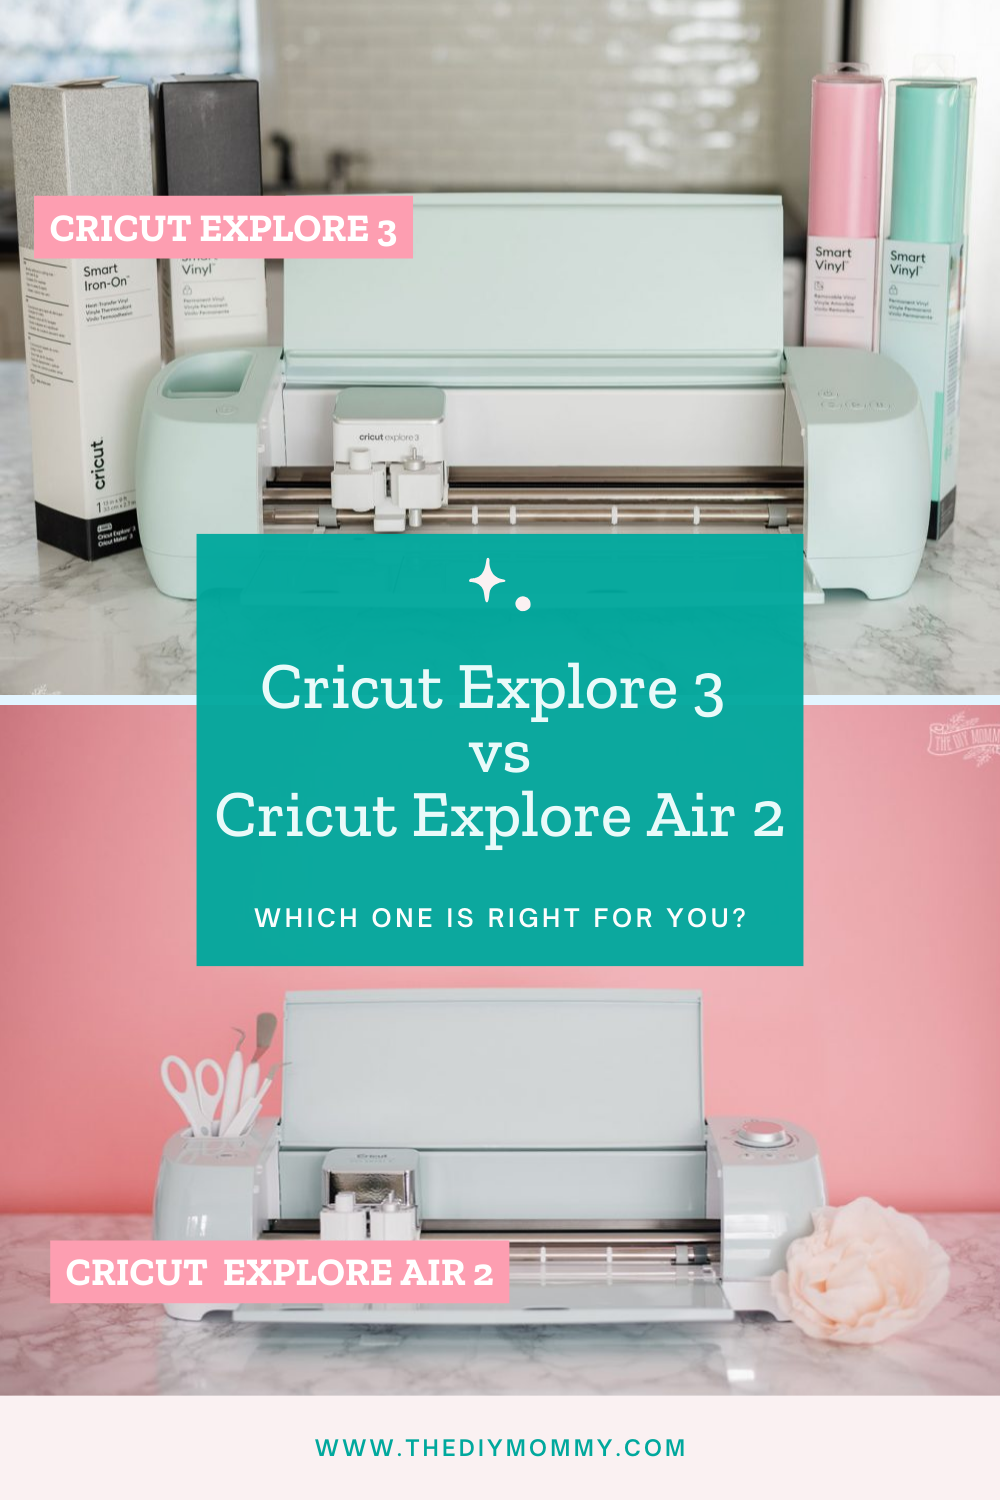 Cricut Explore 3 vs Cricut Explore Air 2: Which One is Right for You?